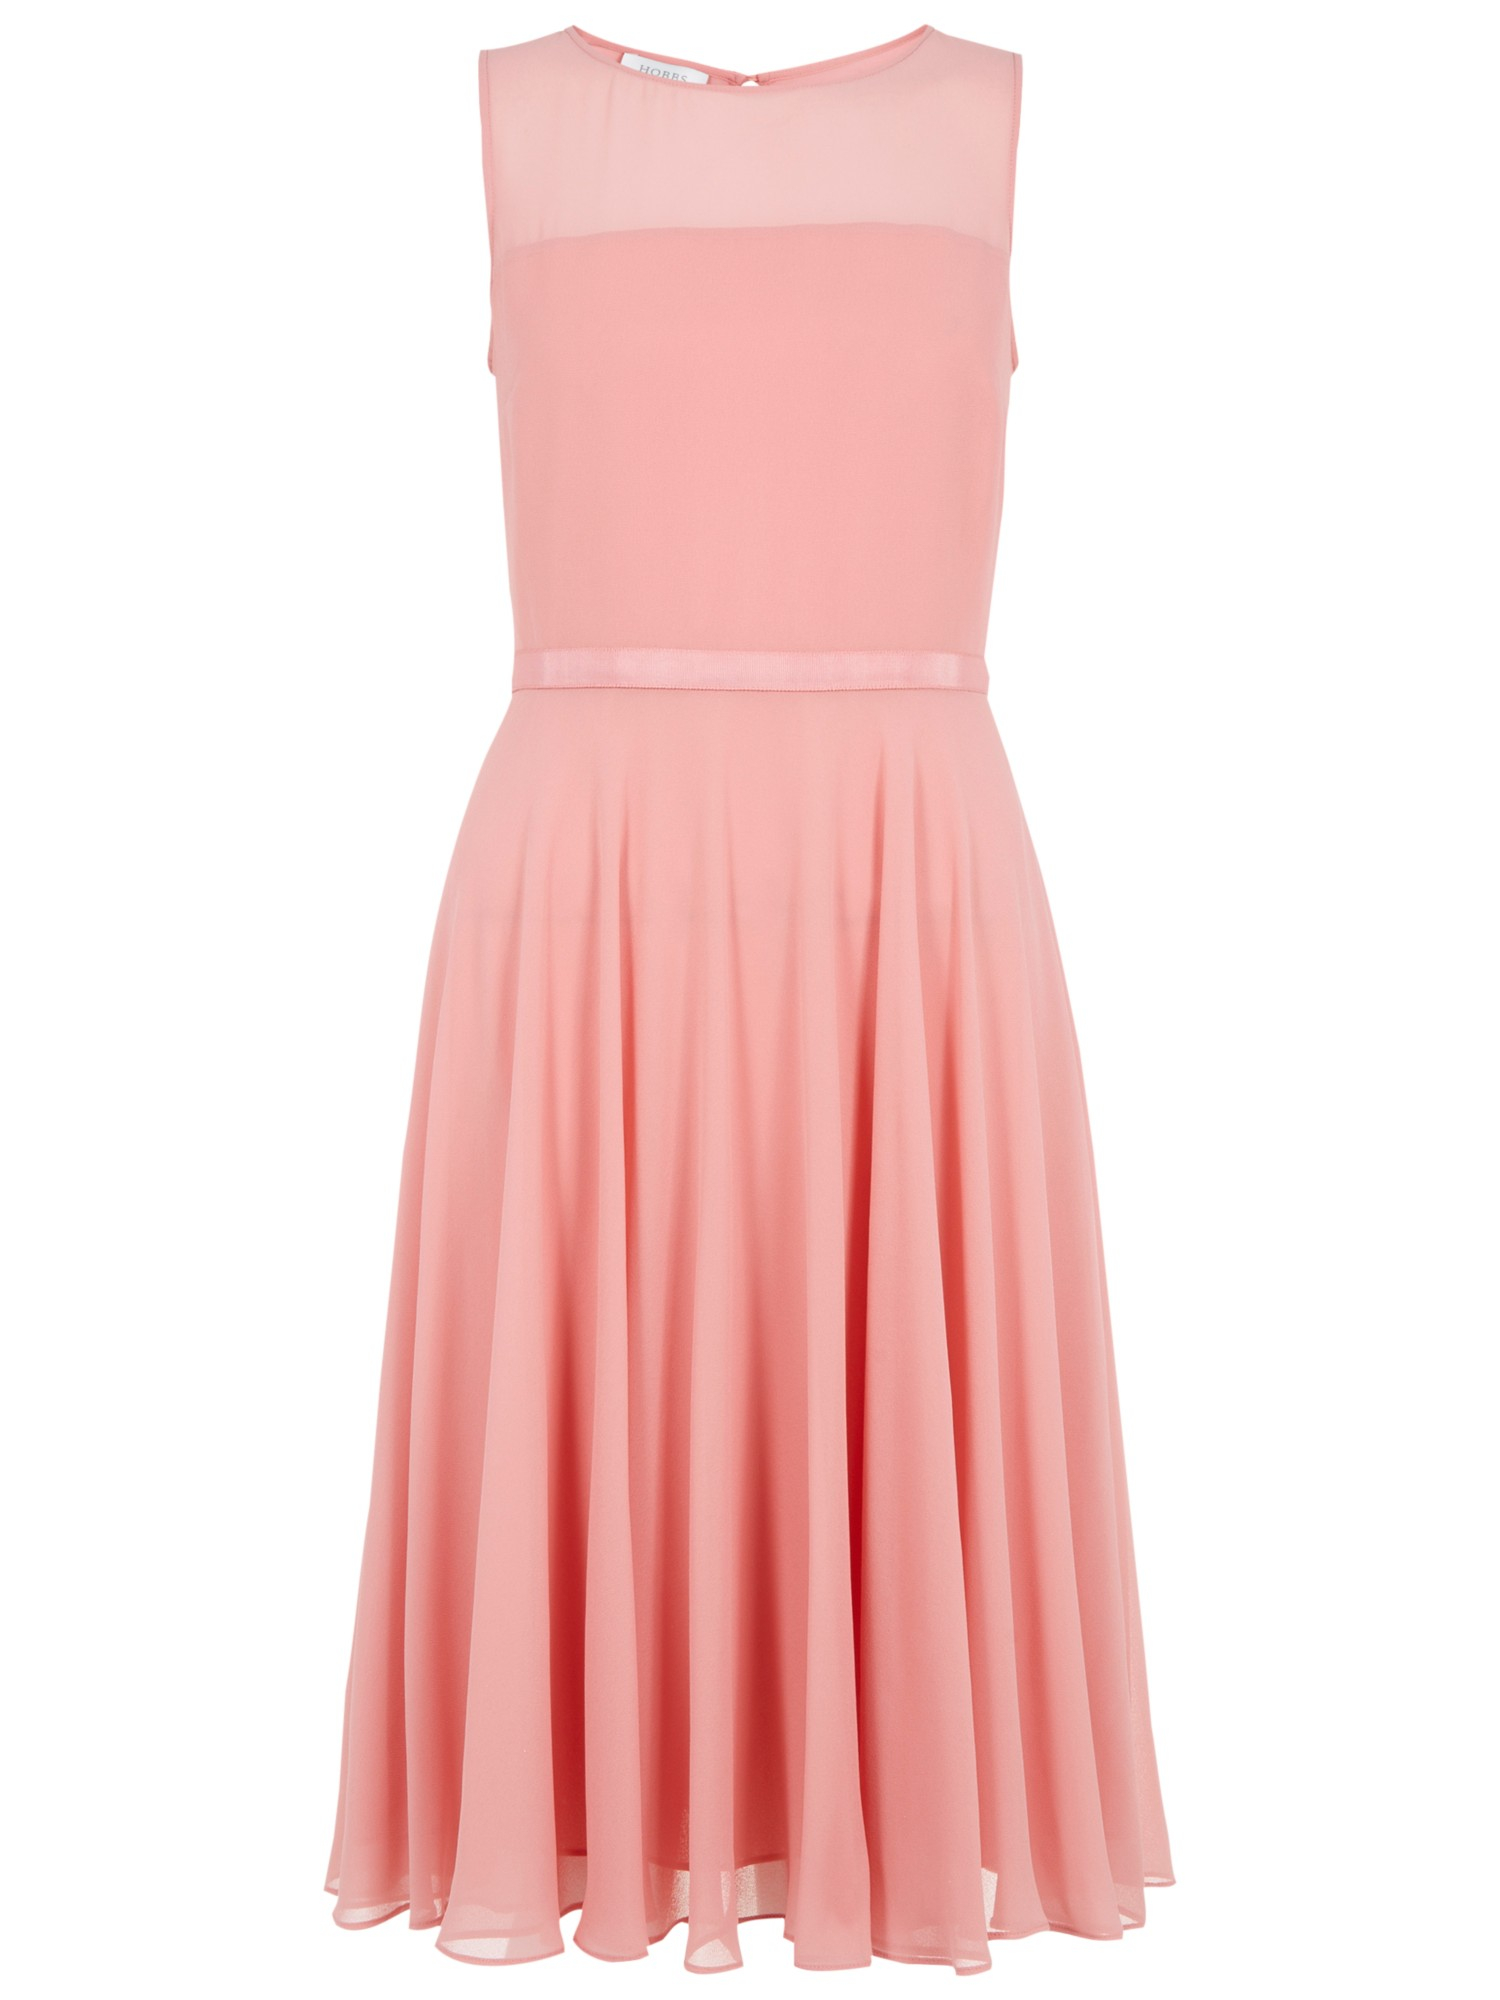 hobbs pink dress